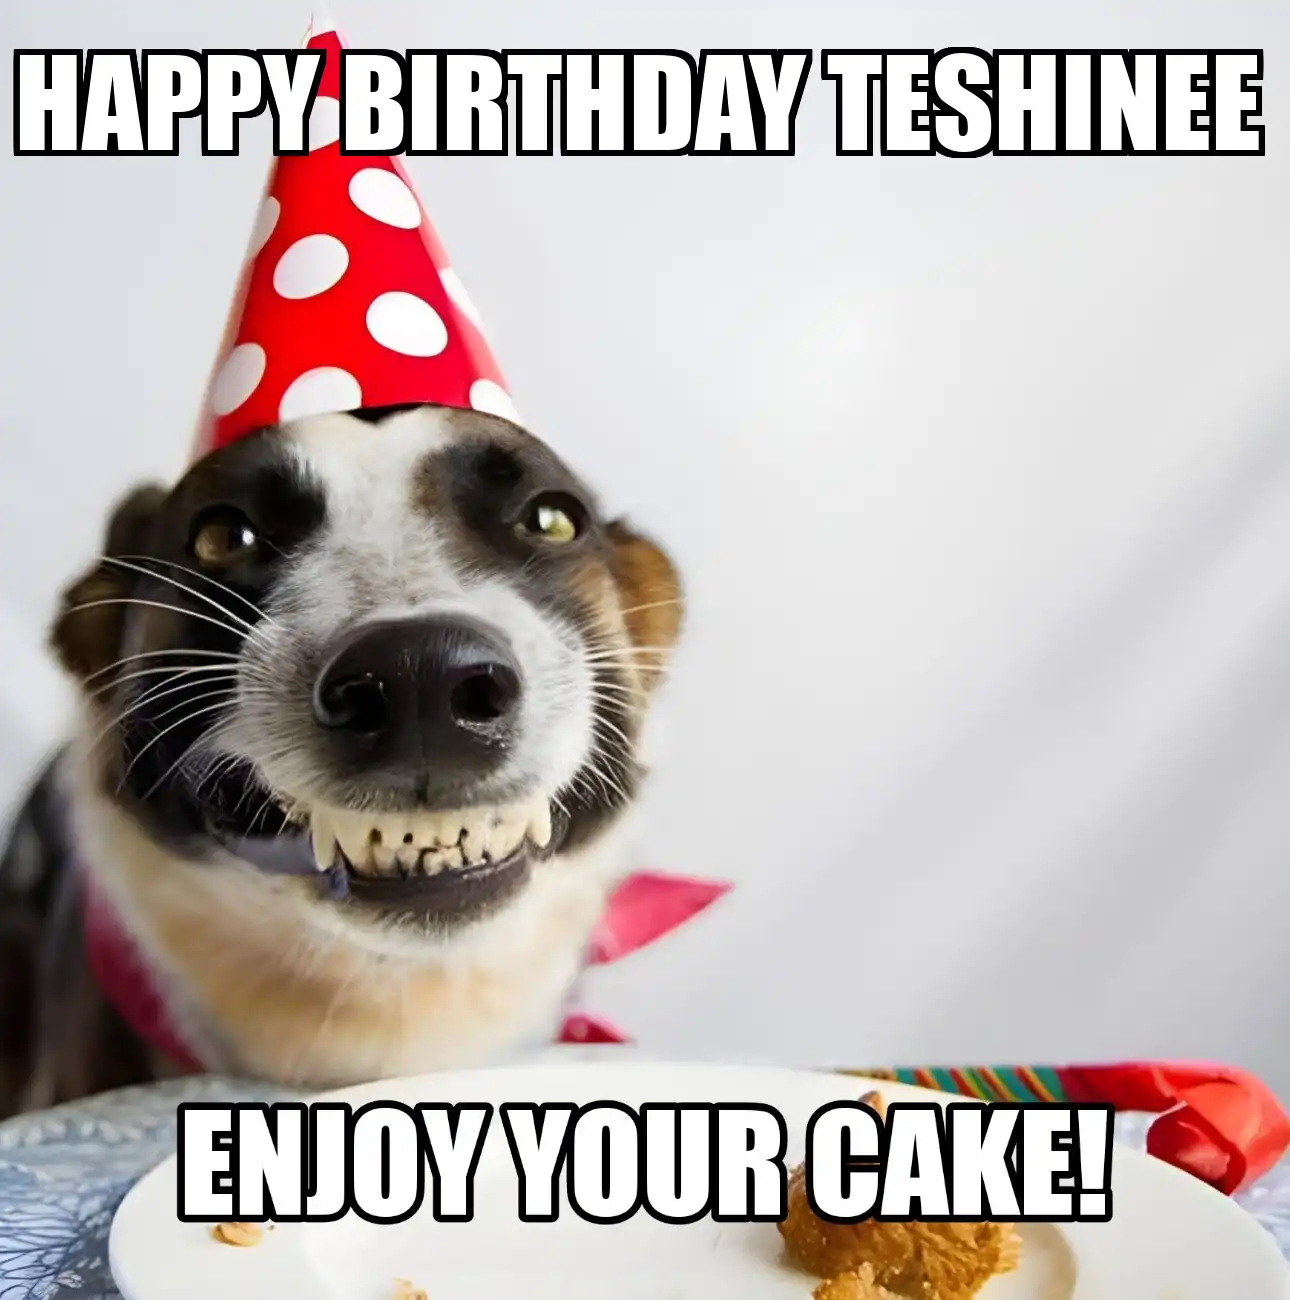 Happy Birthday Teshinee Enjoy Your Cake Dog Meme